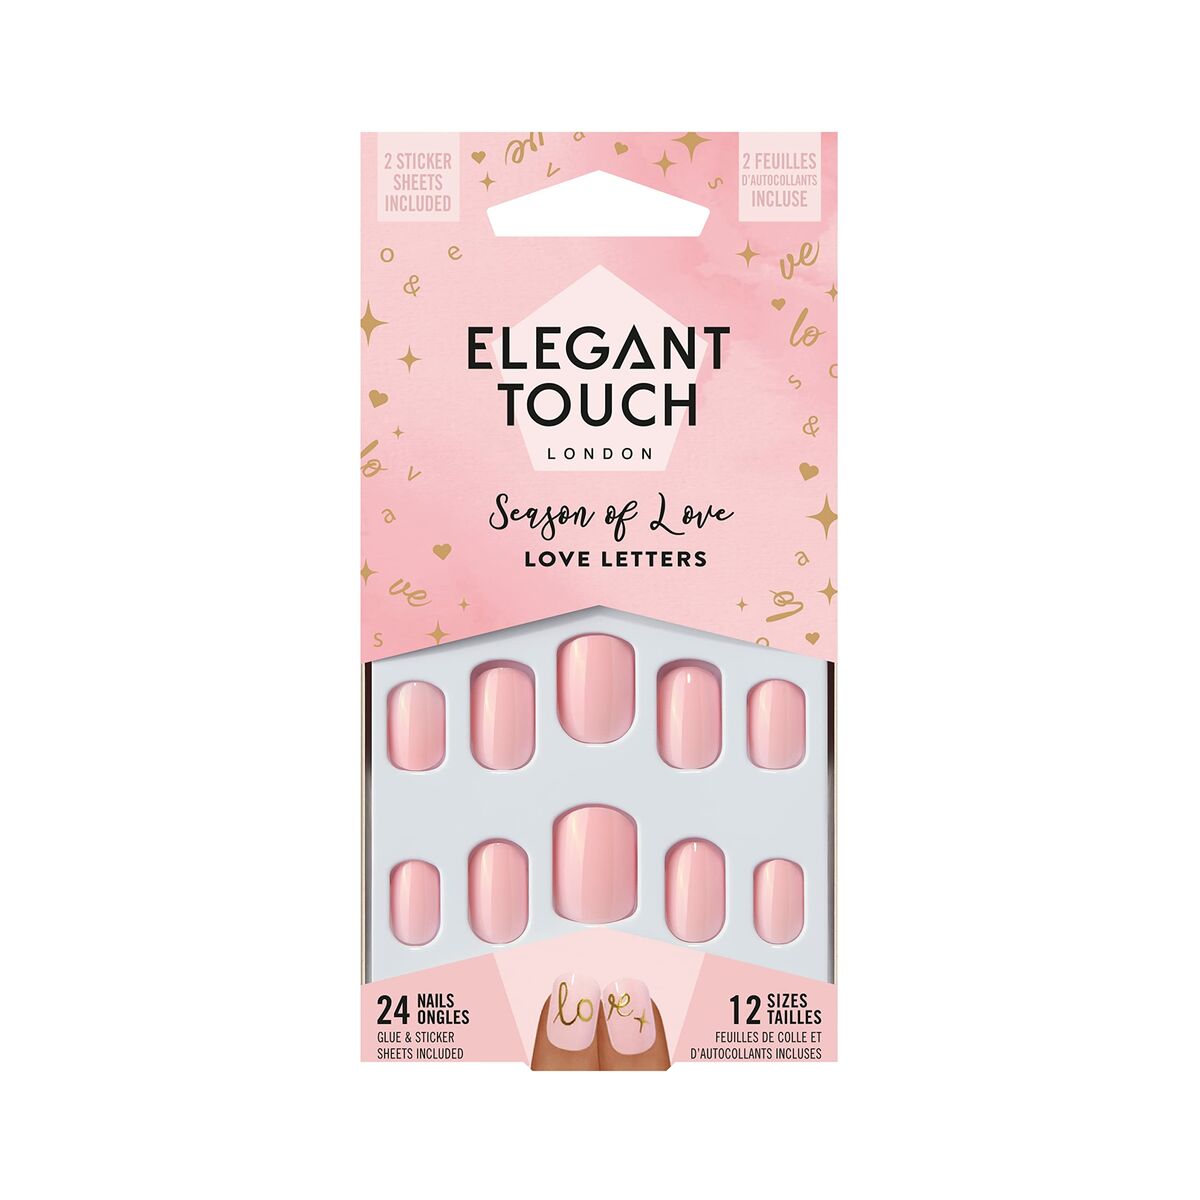 Falske negle Elegant Touch Luxe Looks Love letters (24 pcs)